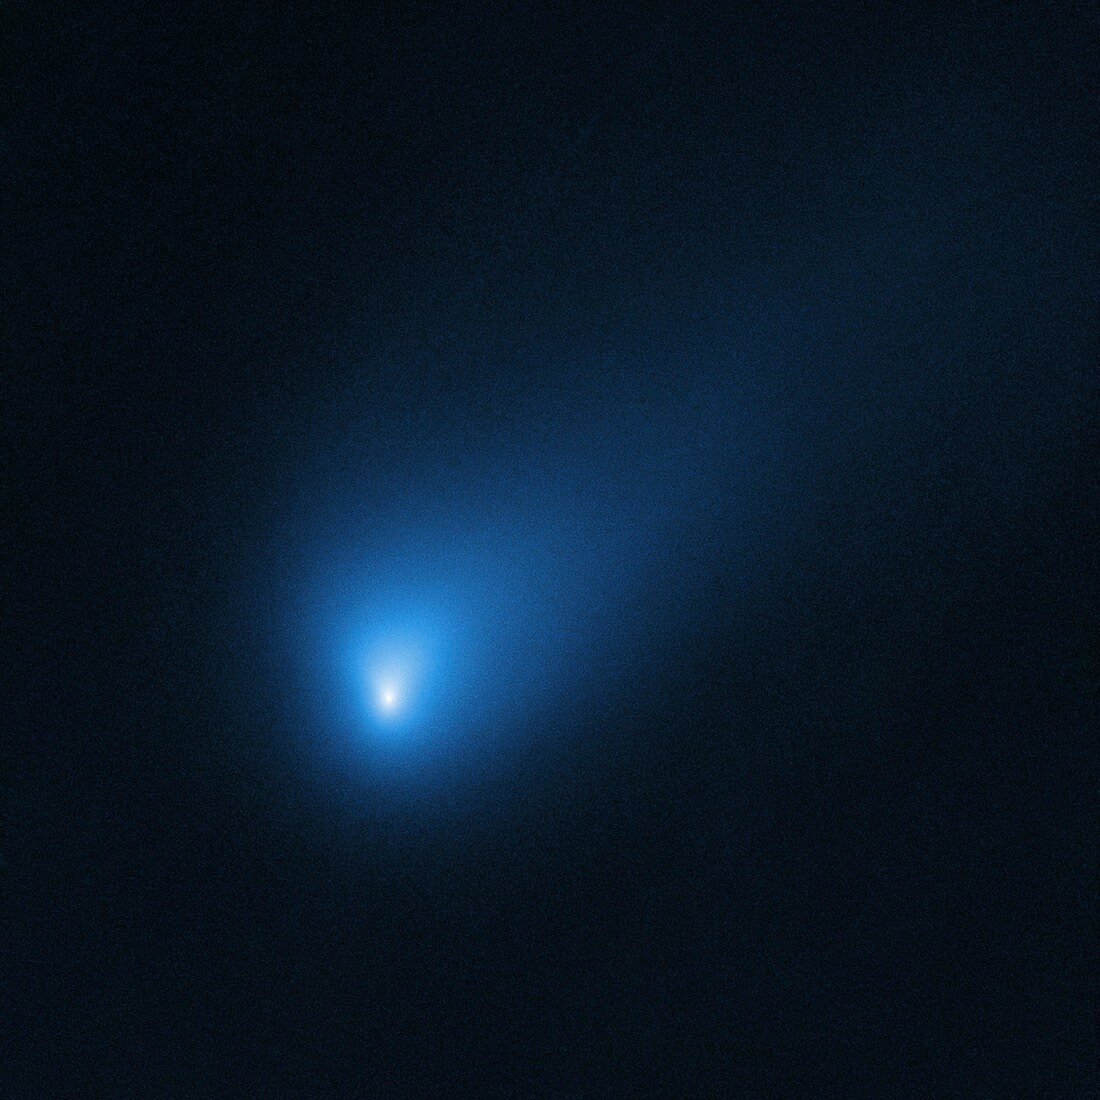 Interstellar comet, Hubble Space Telescope image